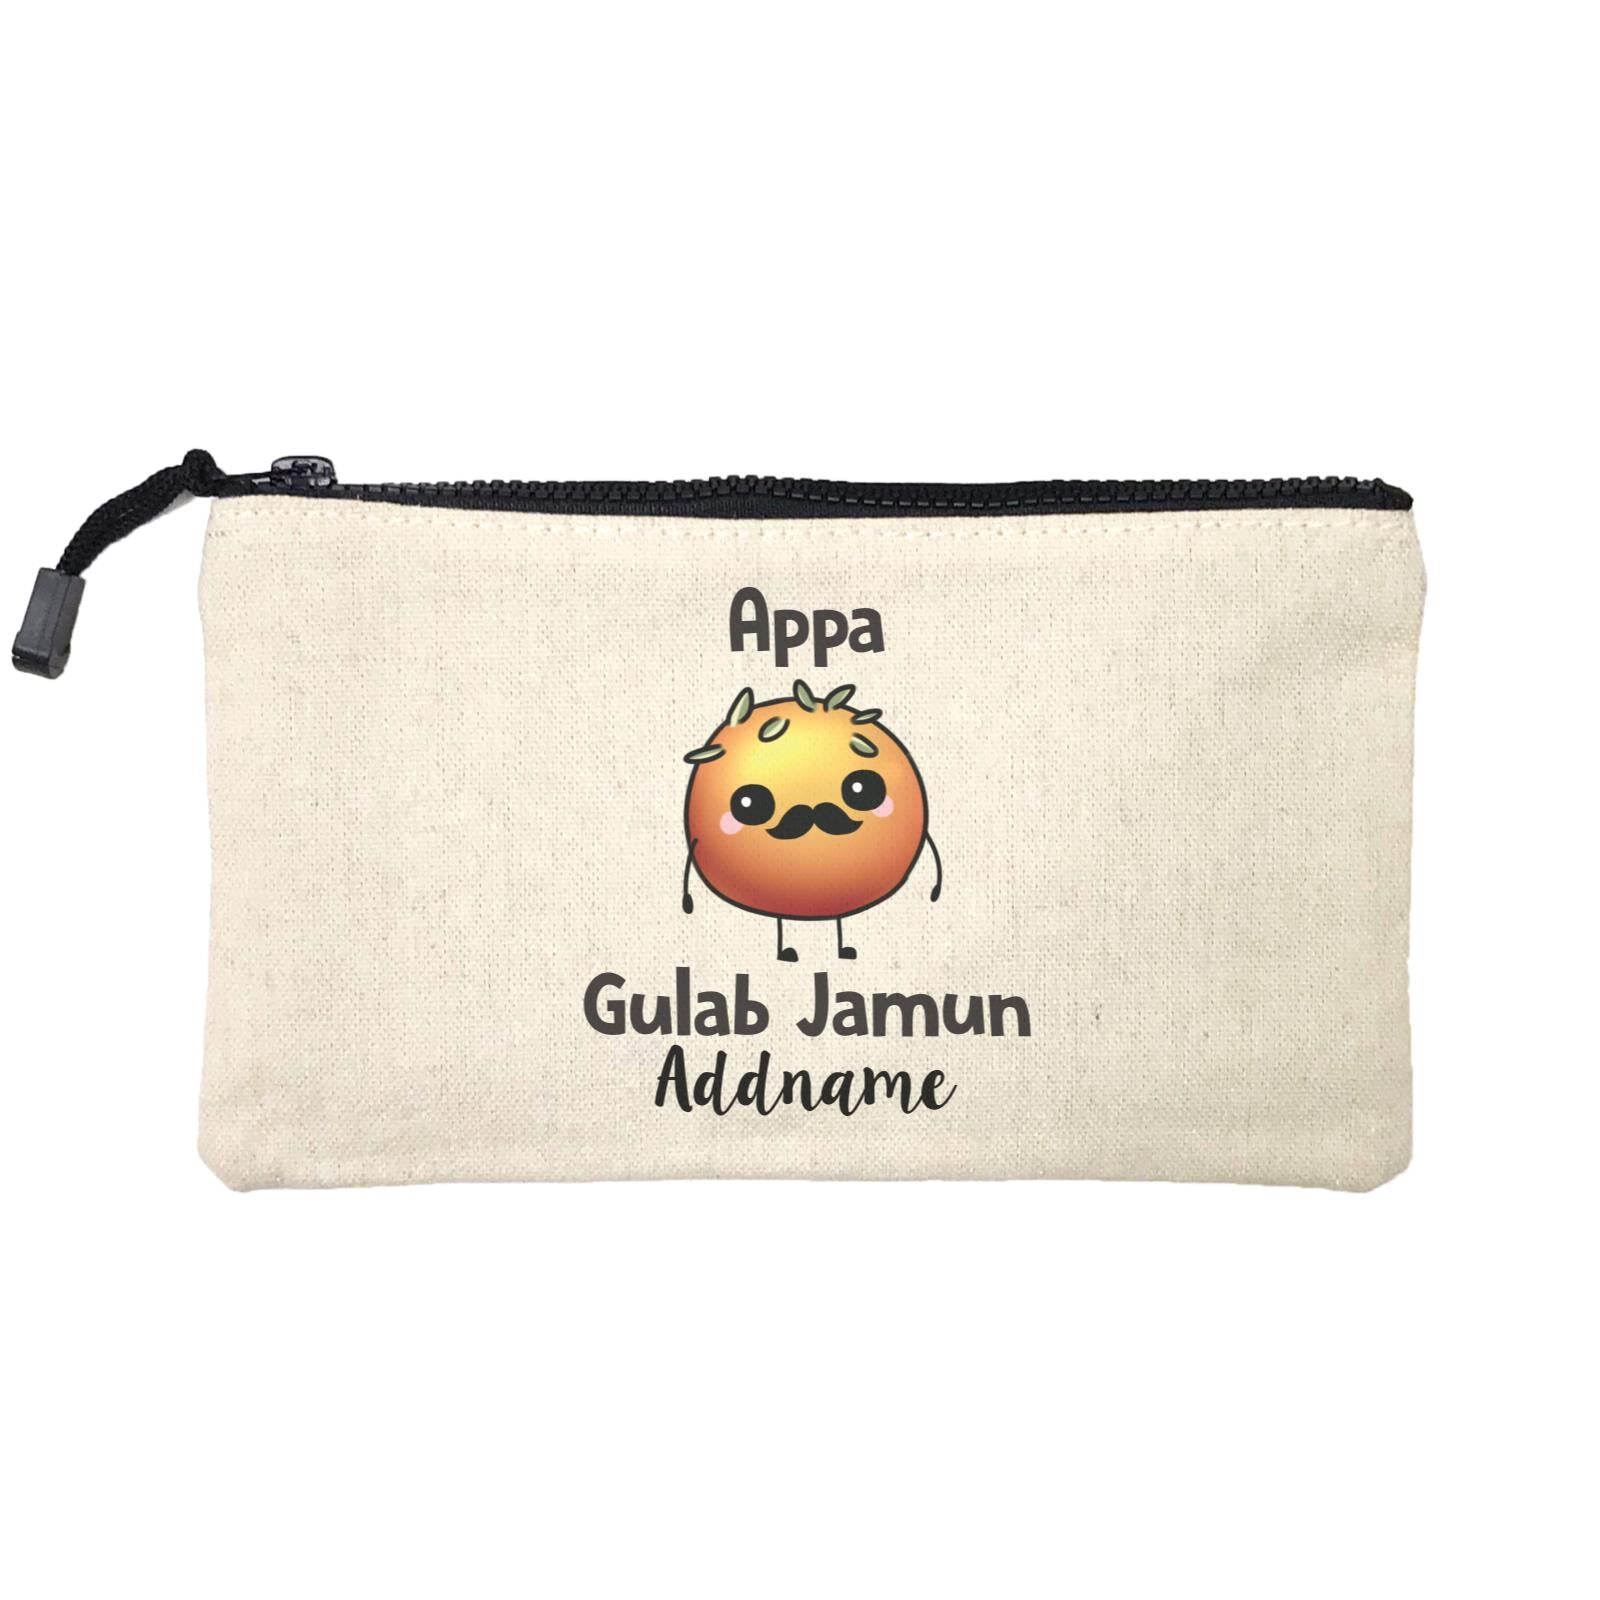 Deepavali Cute Appa Gulab Jamun Addname Mini Accessories Stationery Pouch